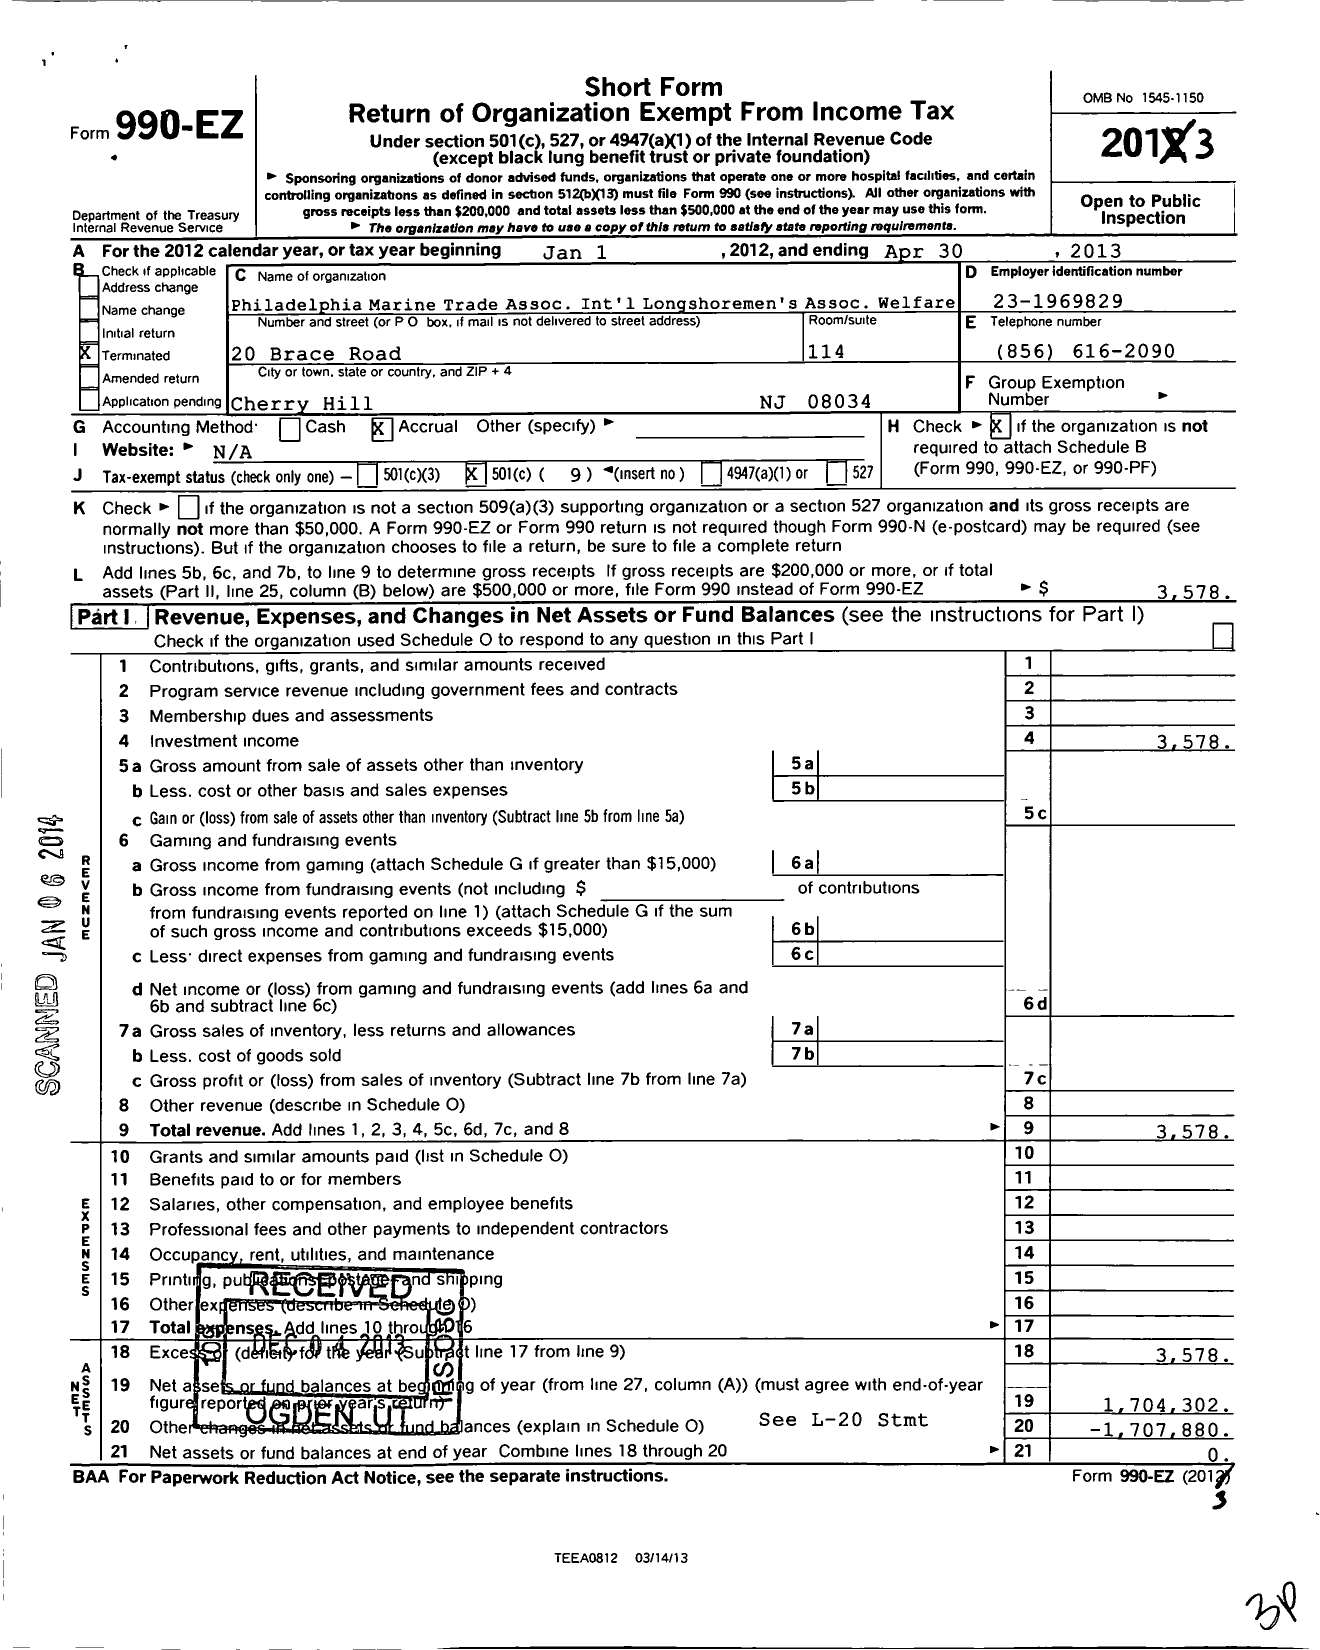 Image of first page of 2012 Form 990EO for Philadelphia Marine Trade Association International Longshoremens Association Welfare